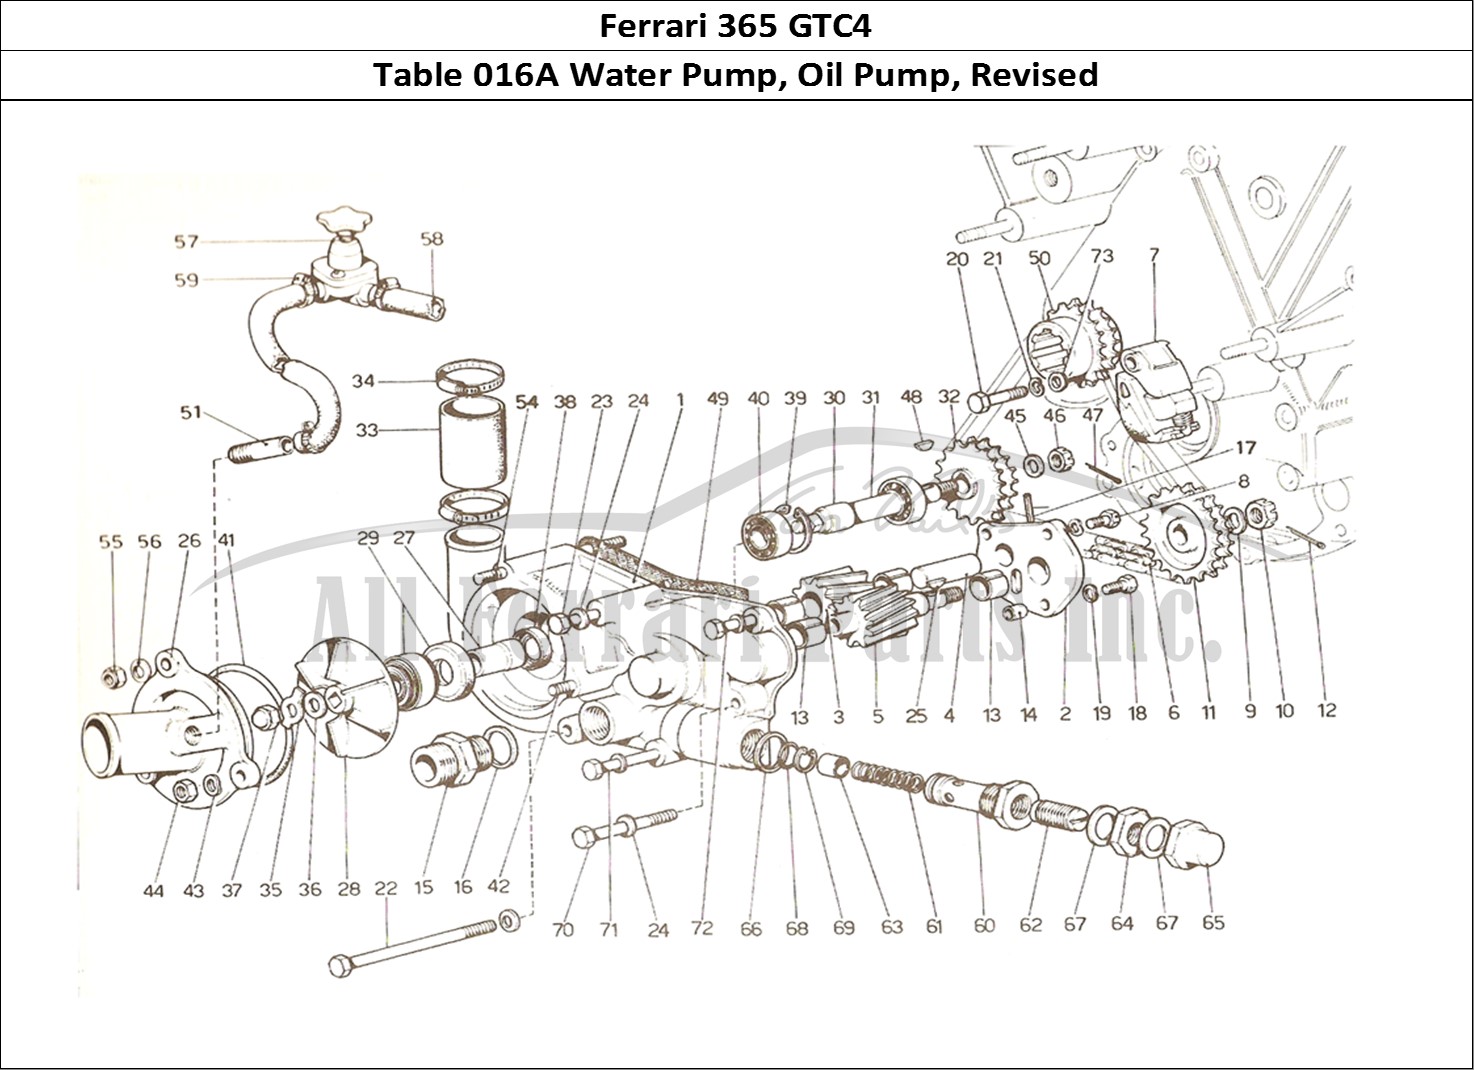 Ferrari Parts Ferrari 365 GTC4 (Mechanical) Page 016 Water & Oil pump - Revisi